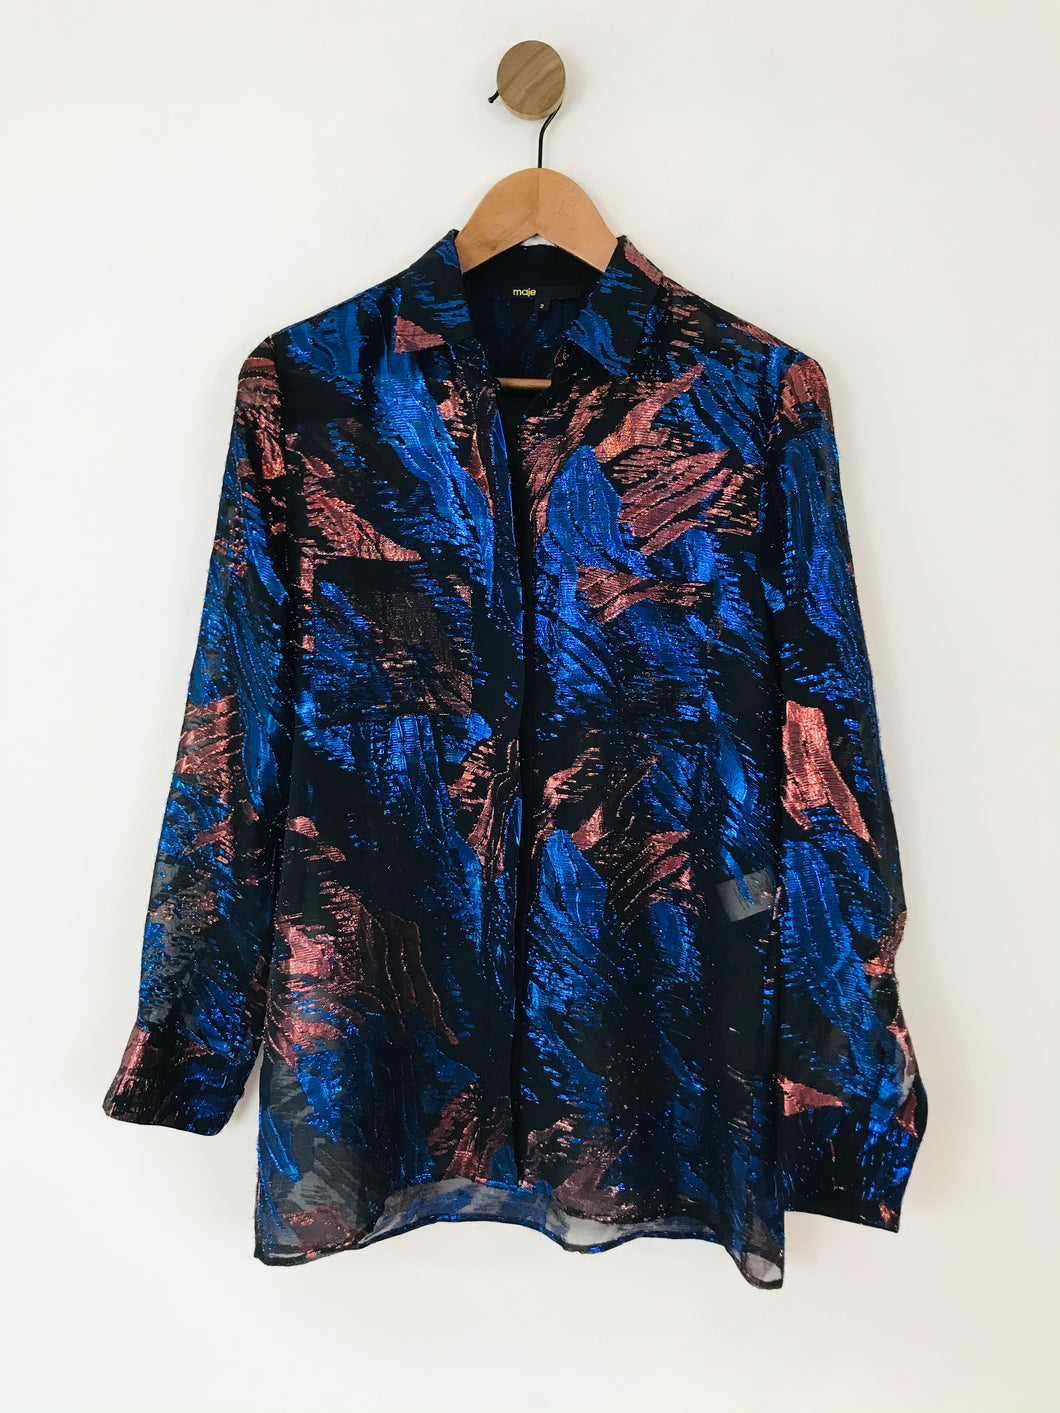 Maje Women's Silk Metallic Print Button-Up Shirt | 2 UK8-10 | Multicolour